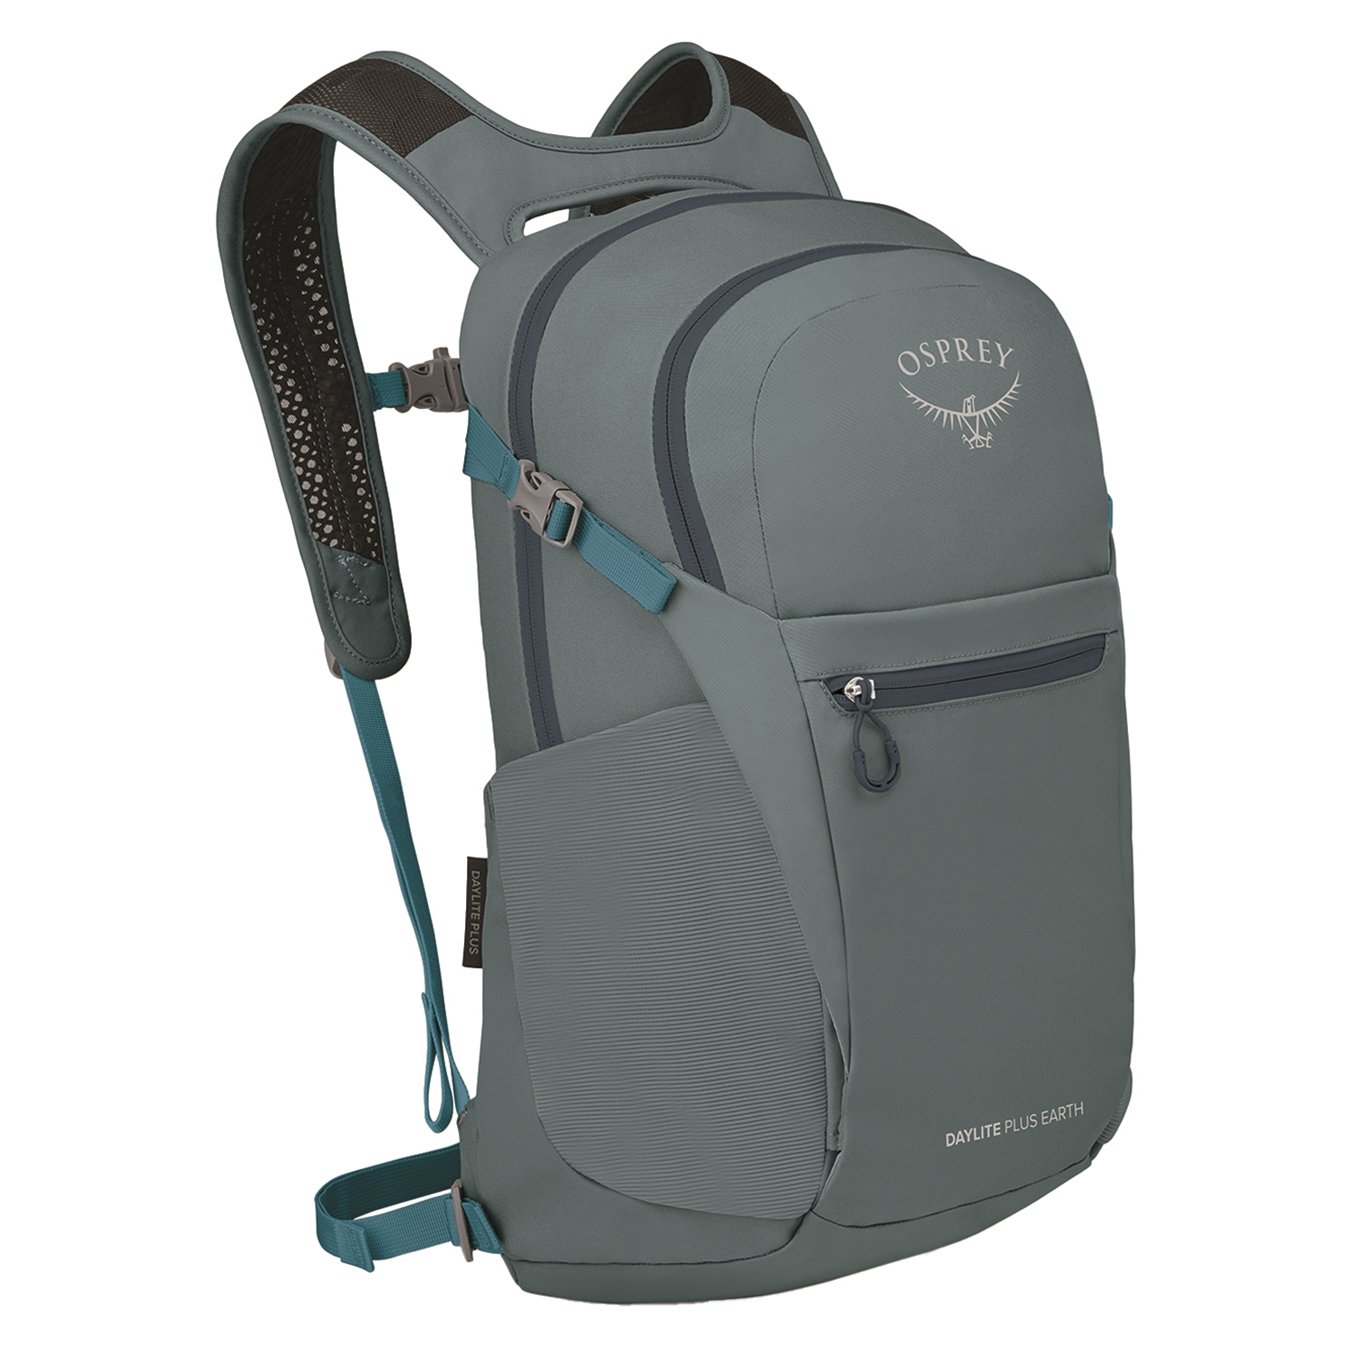 Osprey Daylite Plus Earth sea glass blue backpack